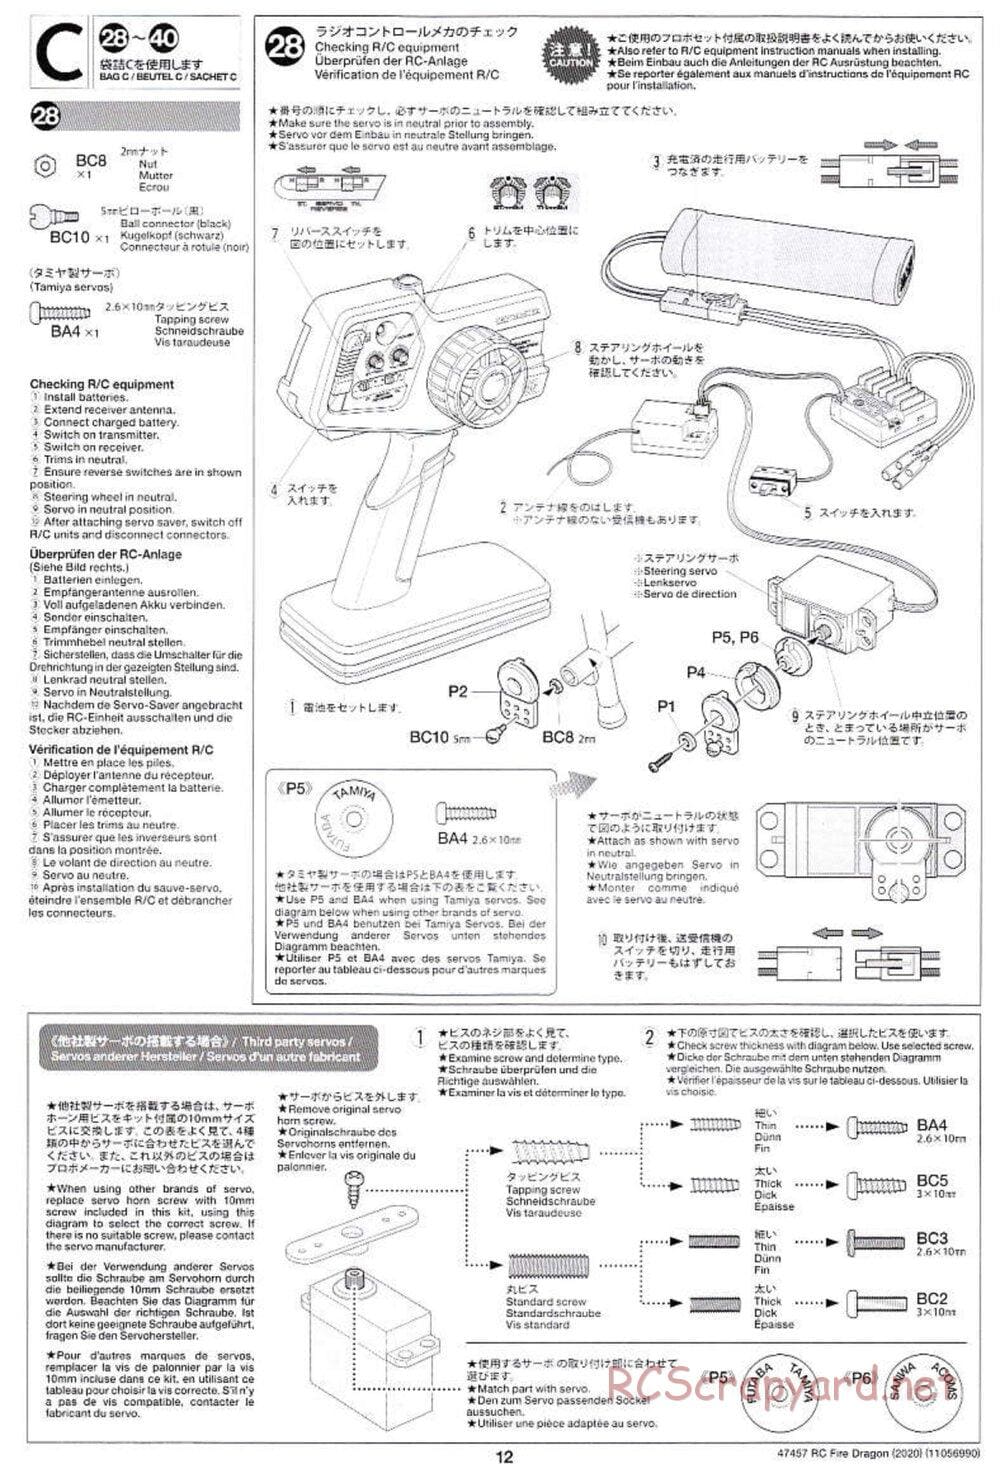 Tamiya - Fire Dragon (2020) Chassis - Manual - Page 12